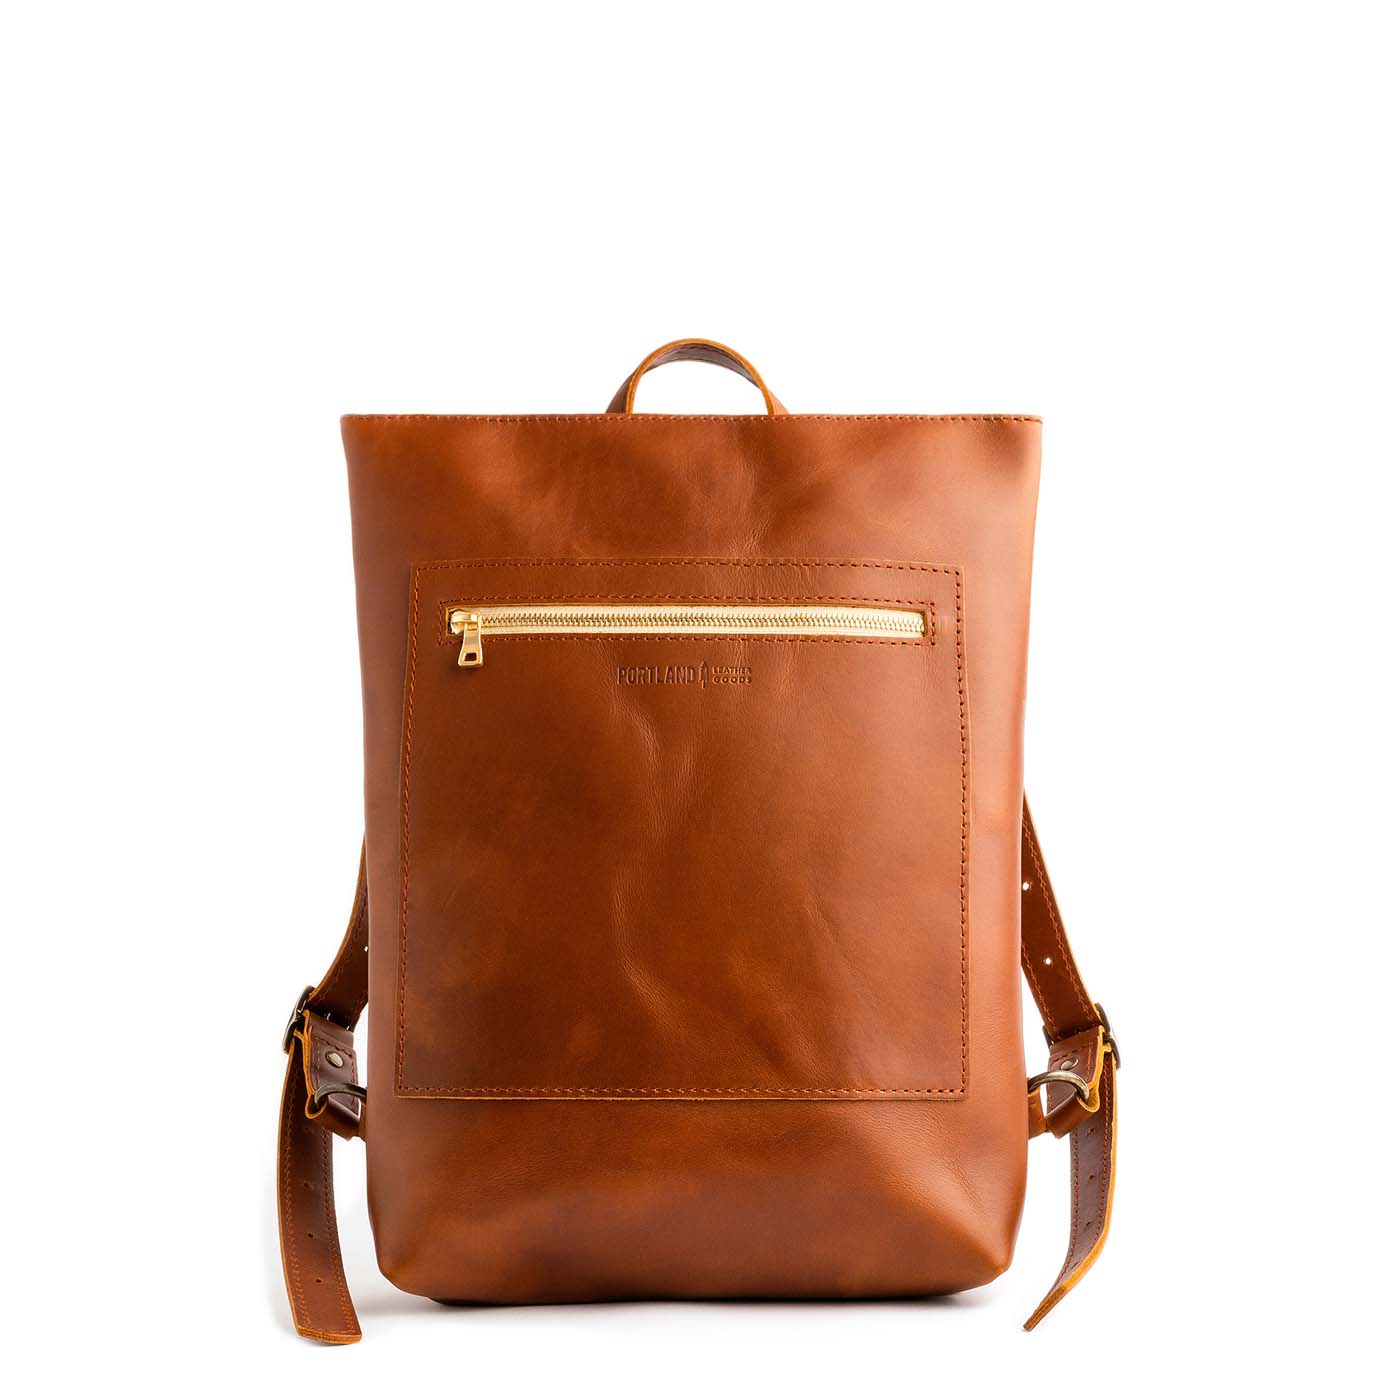 All Color: Honey | Rectangular slim leather backpack